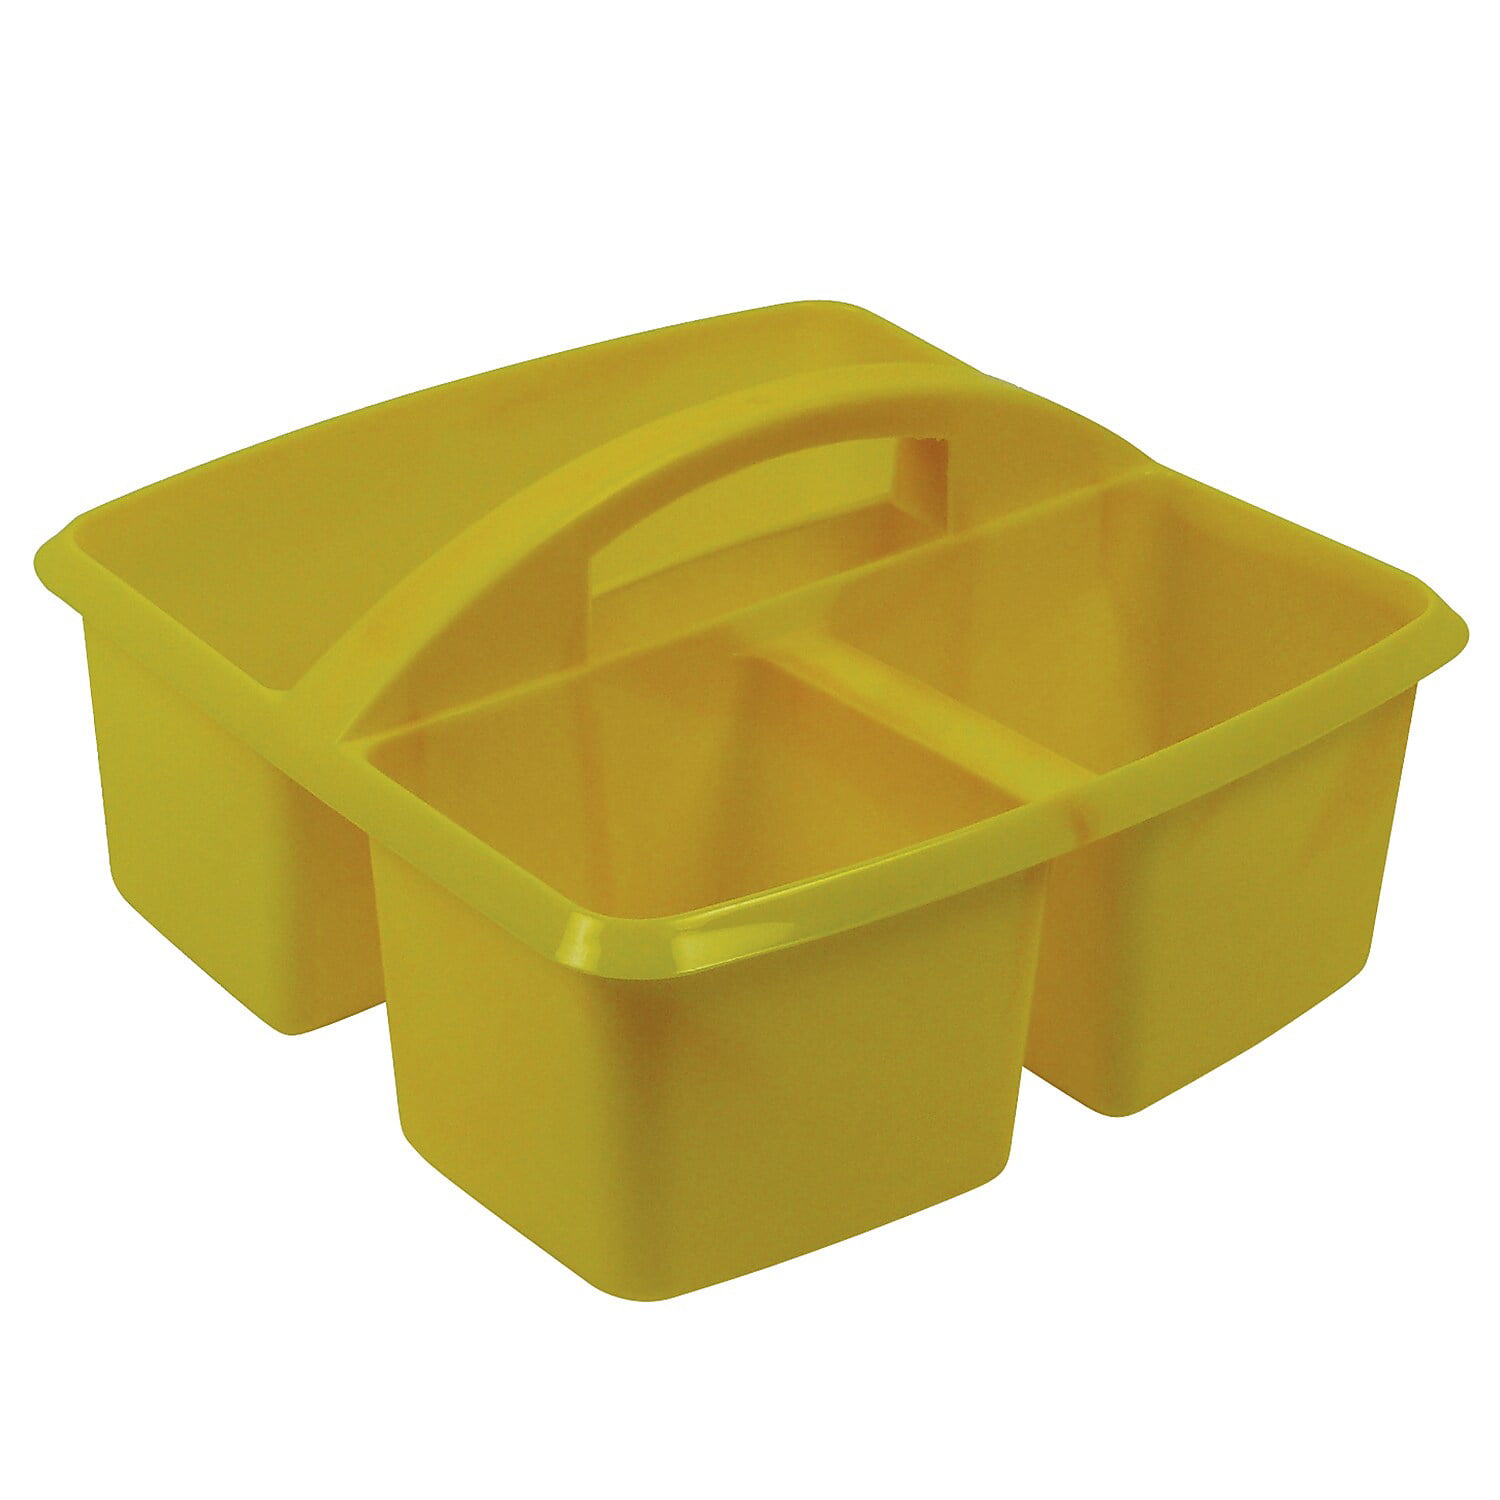 The Teachers' Lounge®  Yellow Plastic Storage Caddy